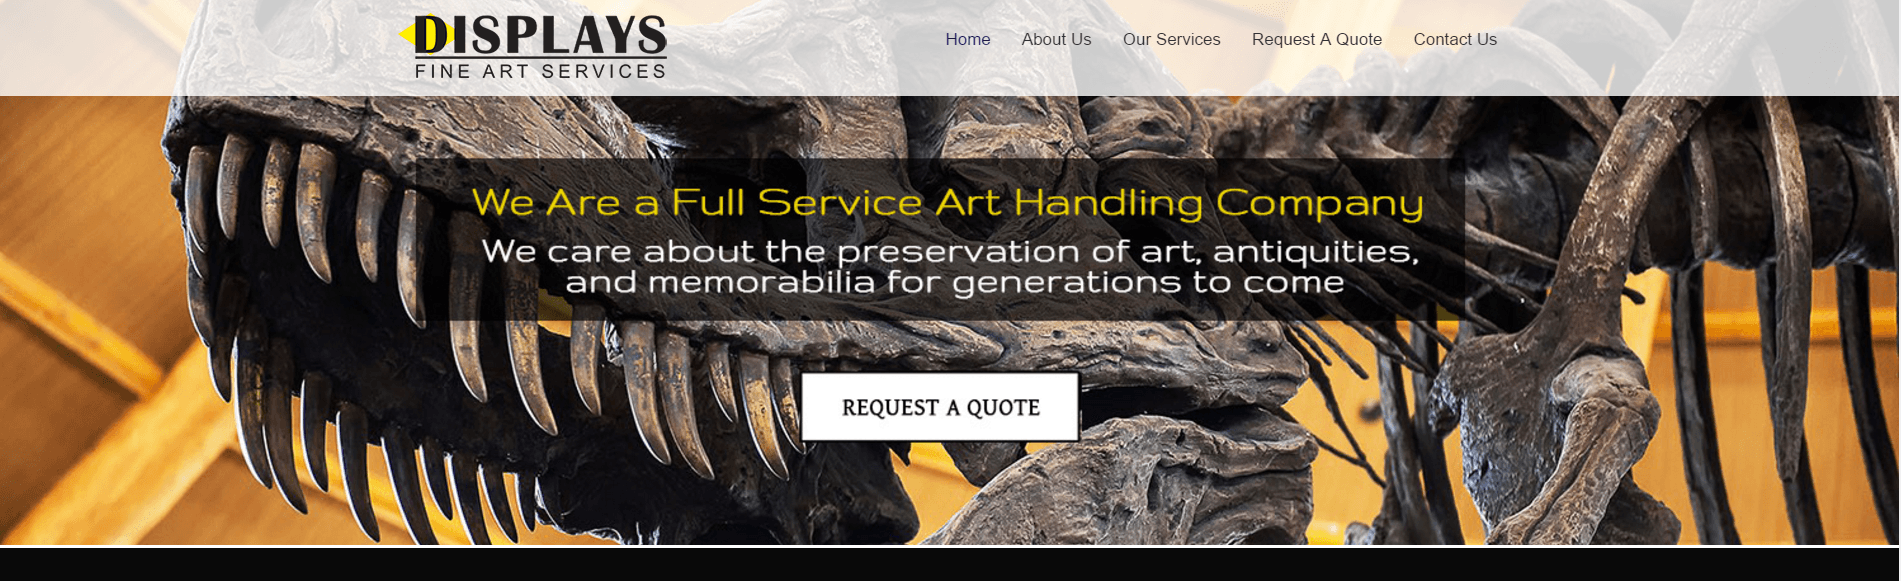 Displays Fine Art Services Website in 2015